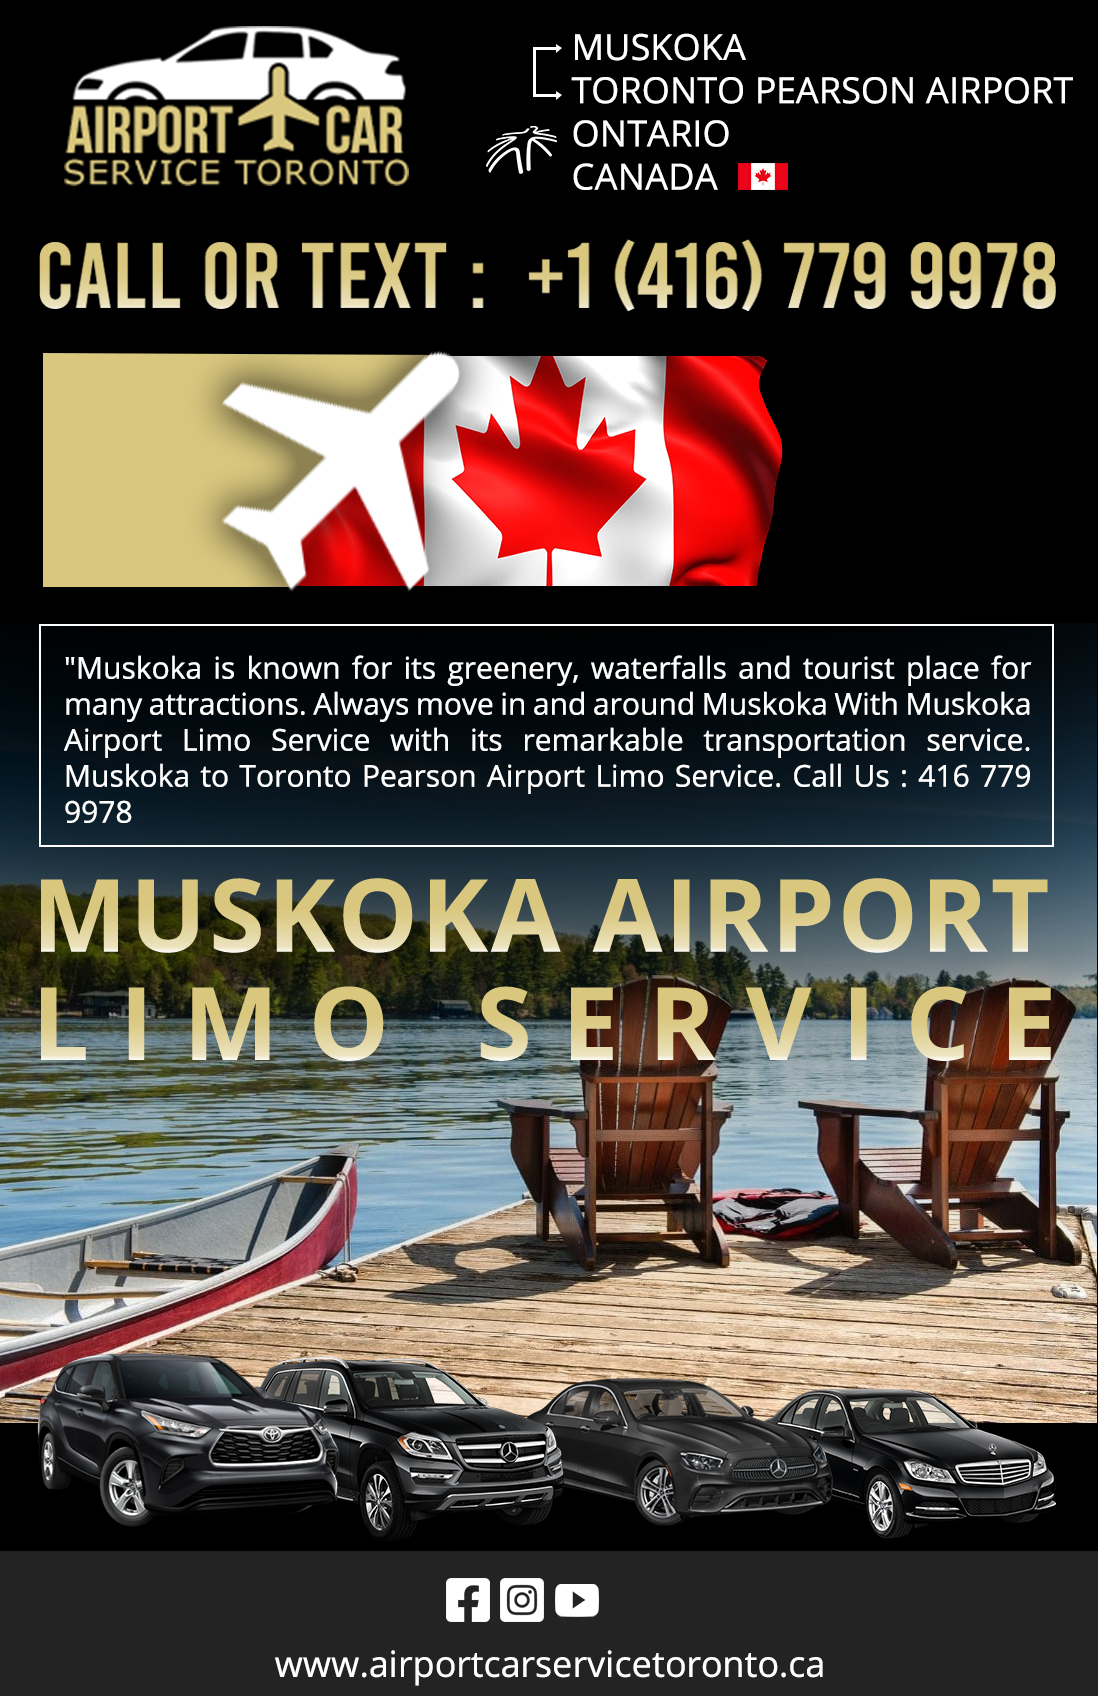 Muskoka Airport Limo Service